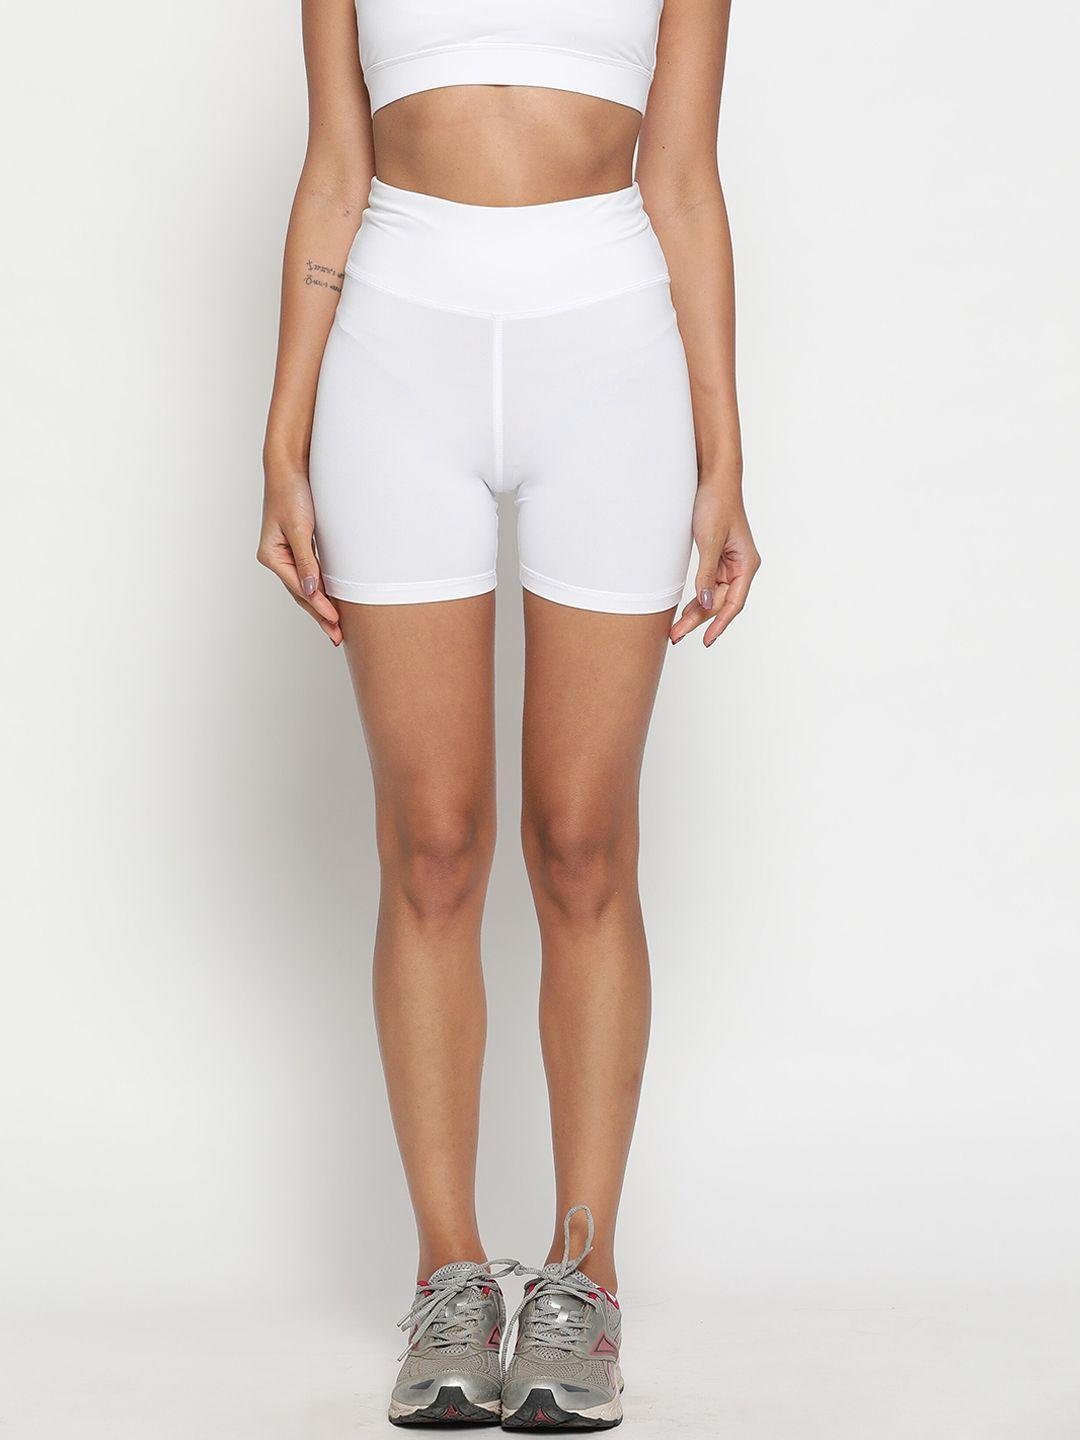 wearjukebox women white slim fit high-rise training or gym shorts